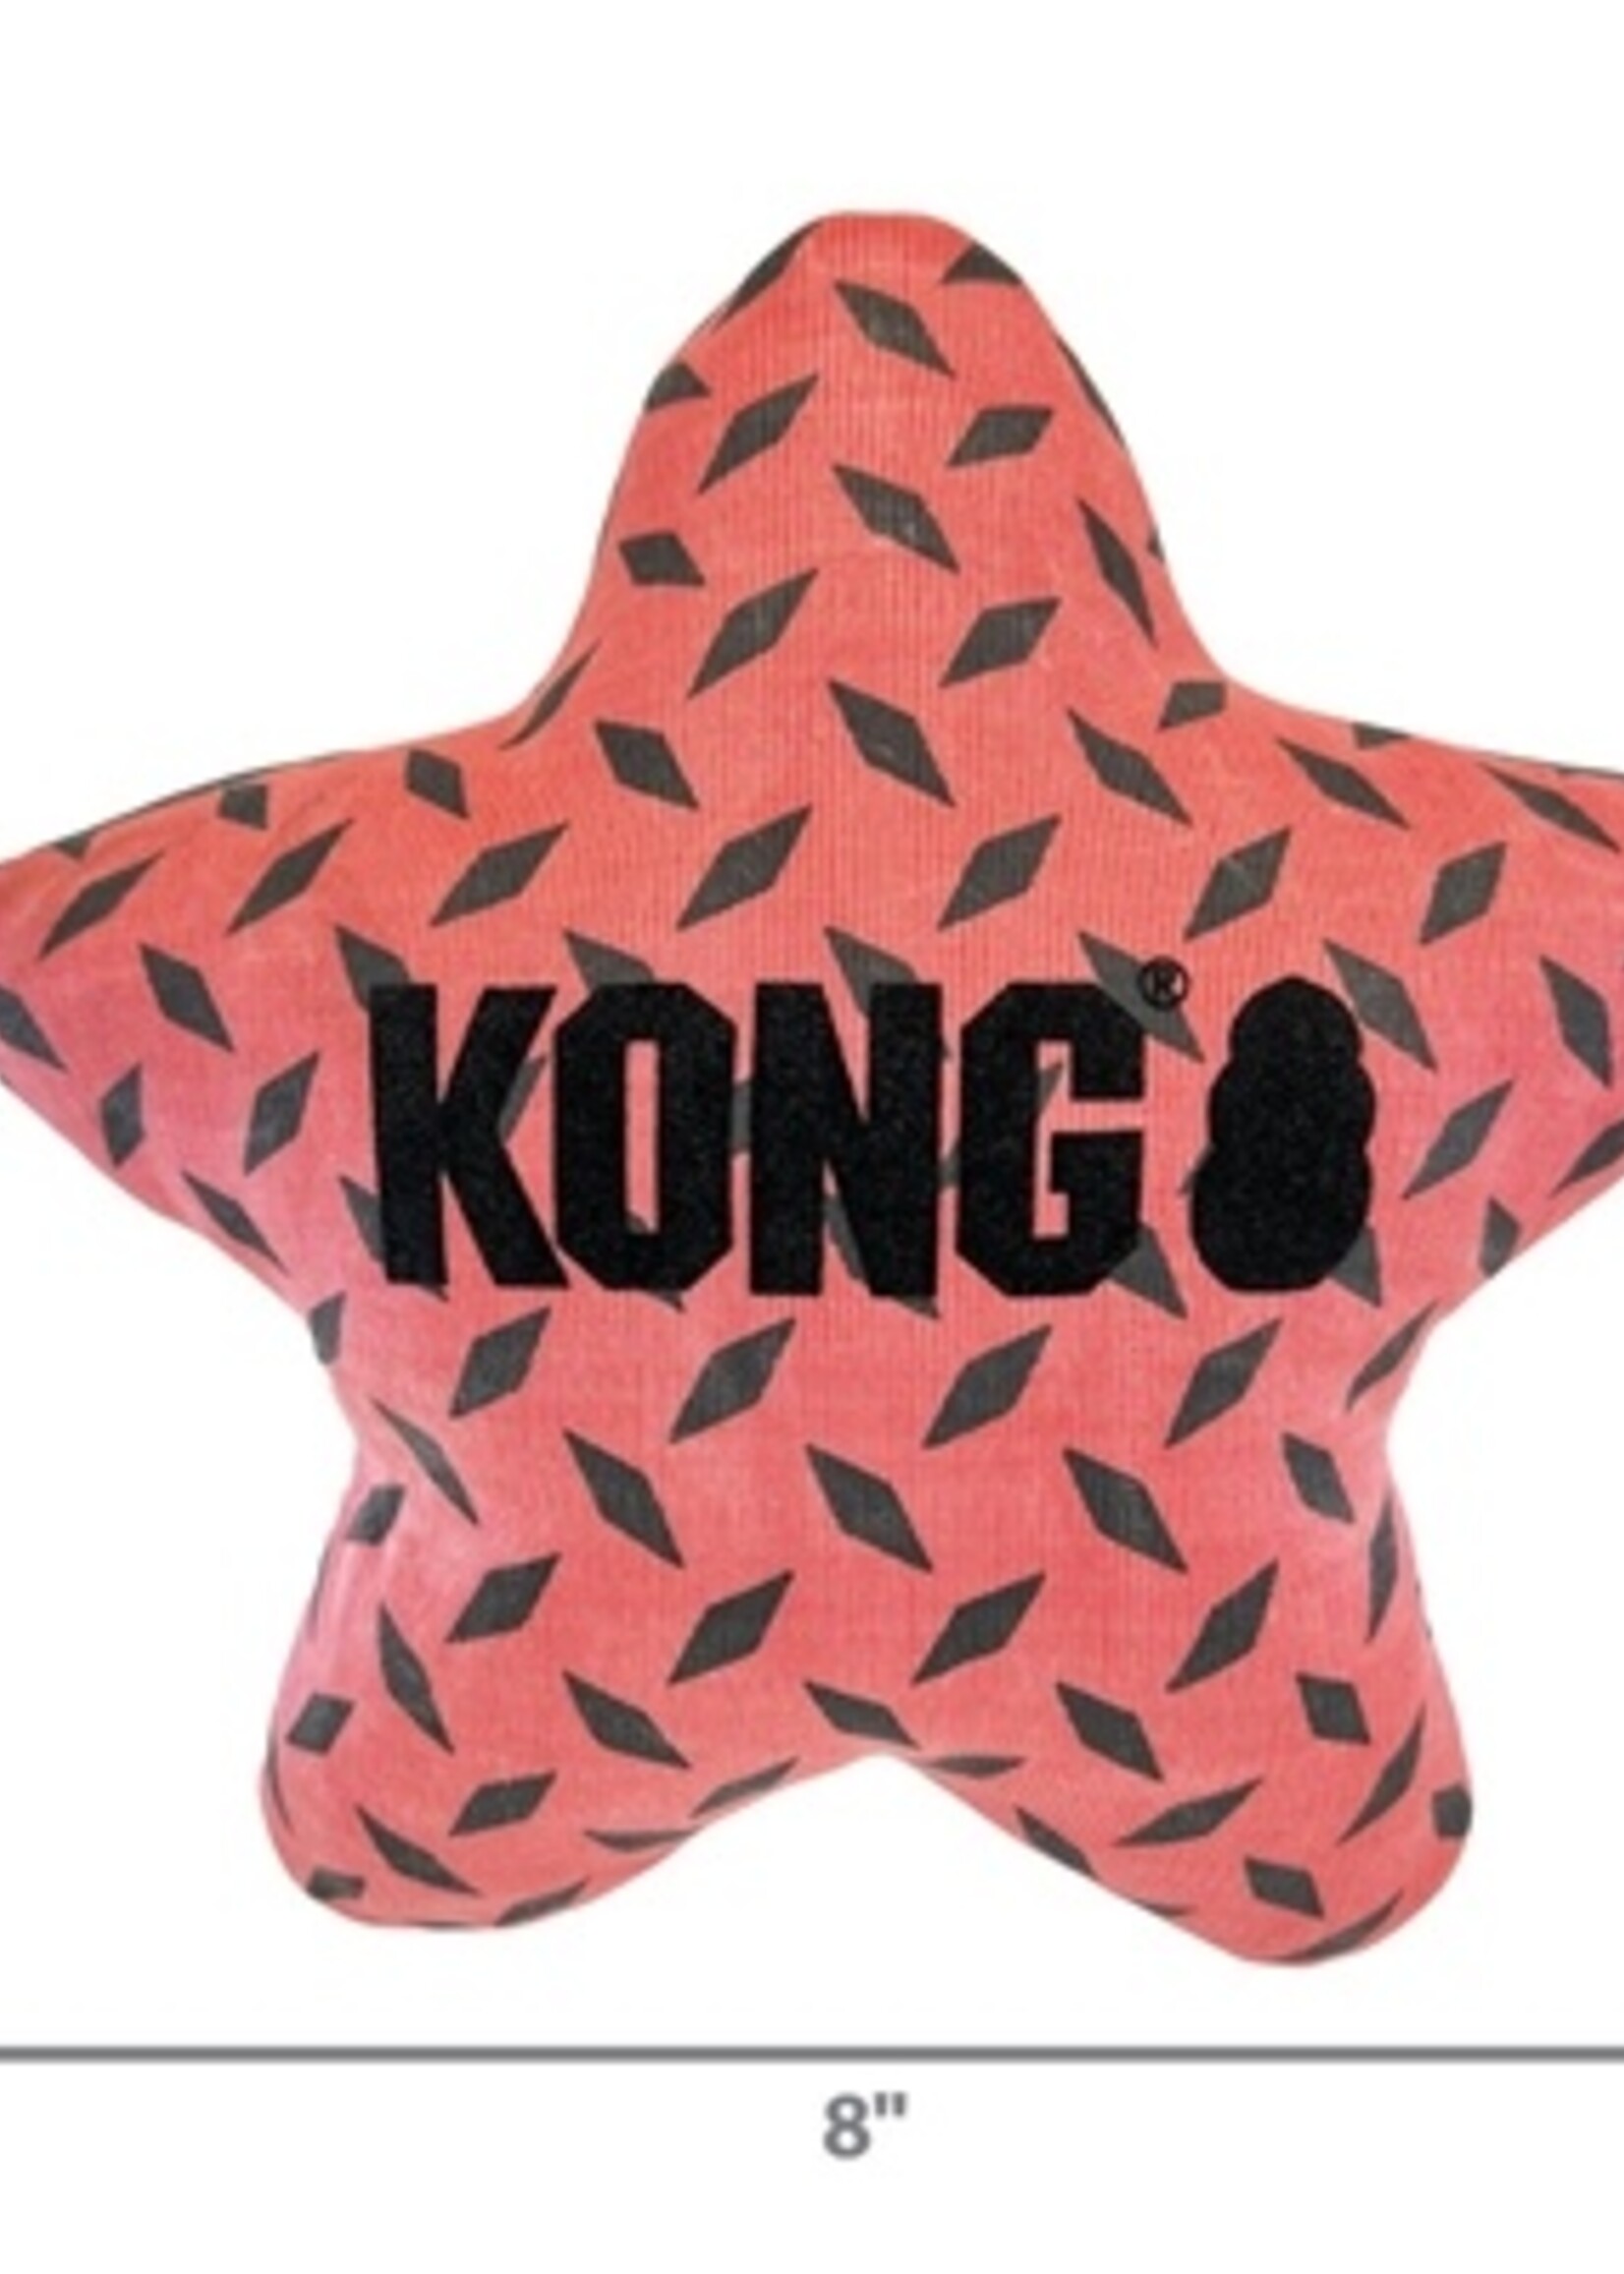 Kong Kong maxx ster